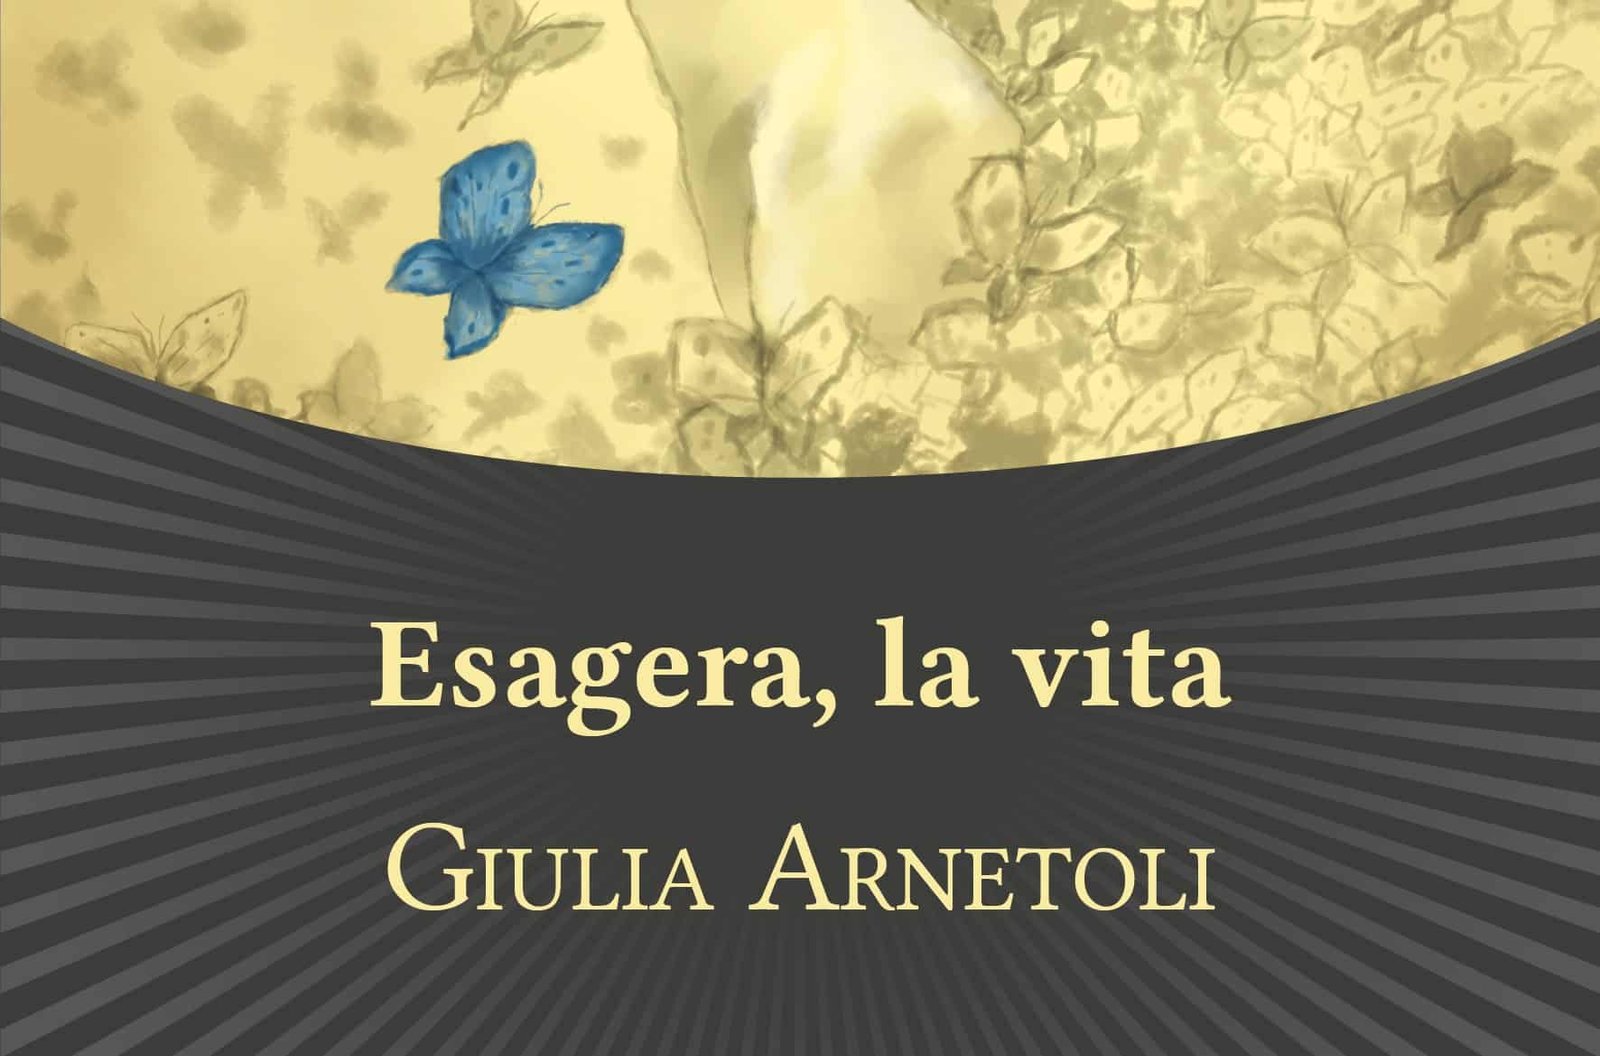 Giulia Arnetoli